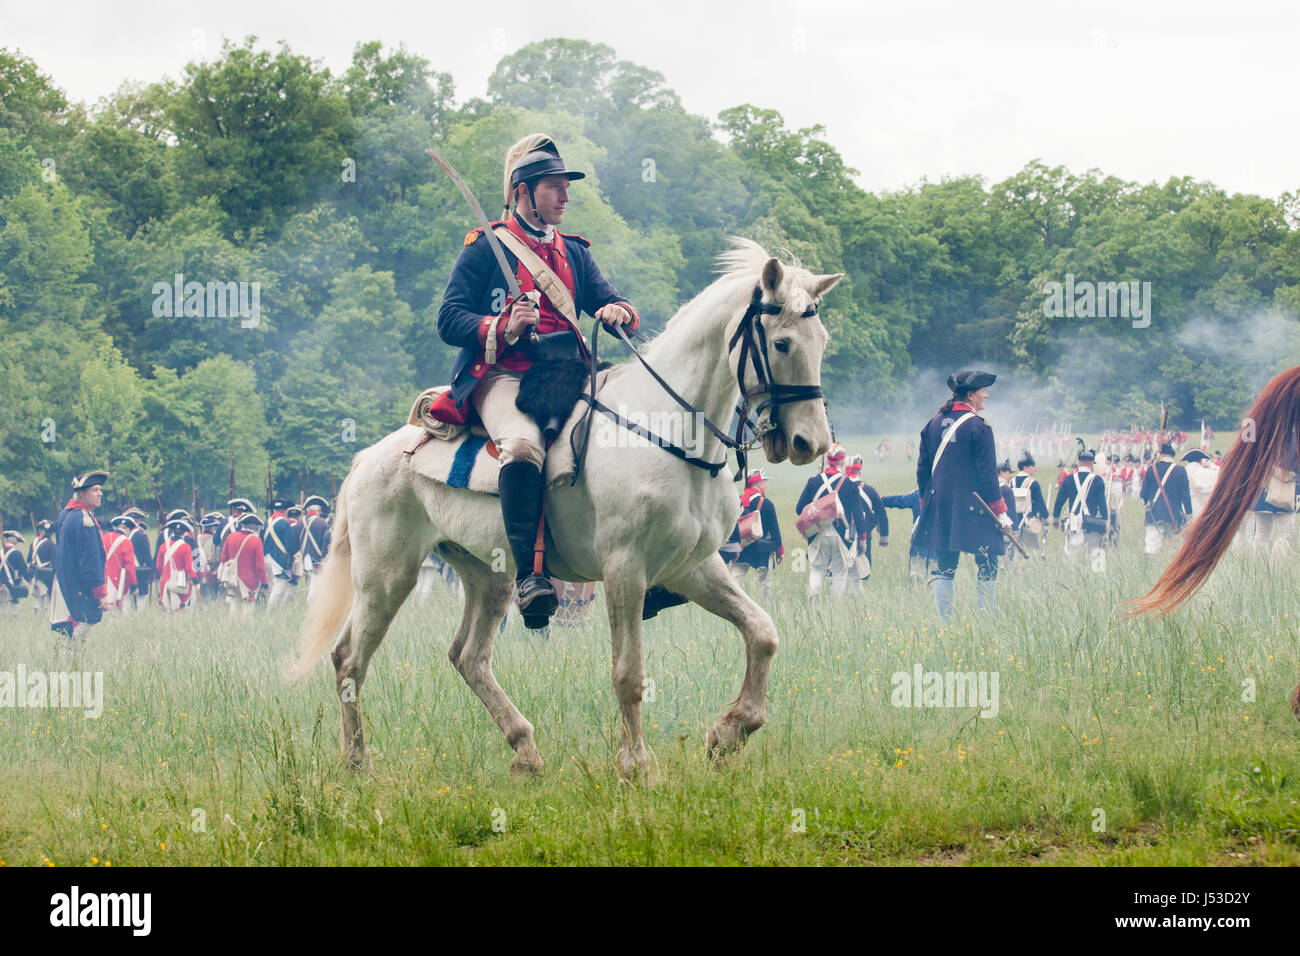 Revolutionary War re-enactors on horseback - USA Stock Photo